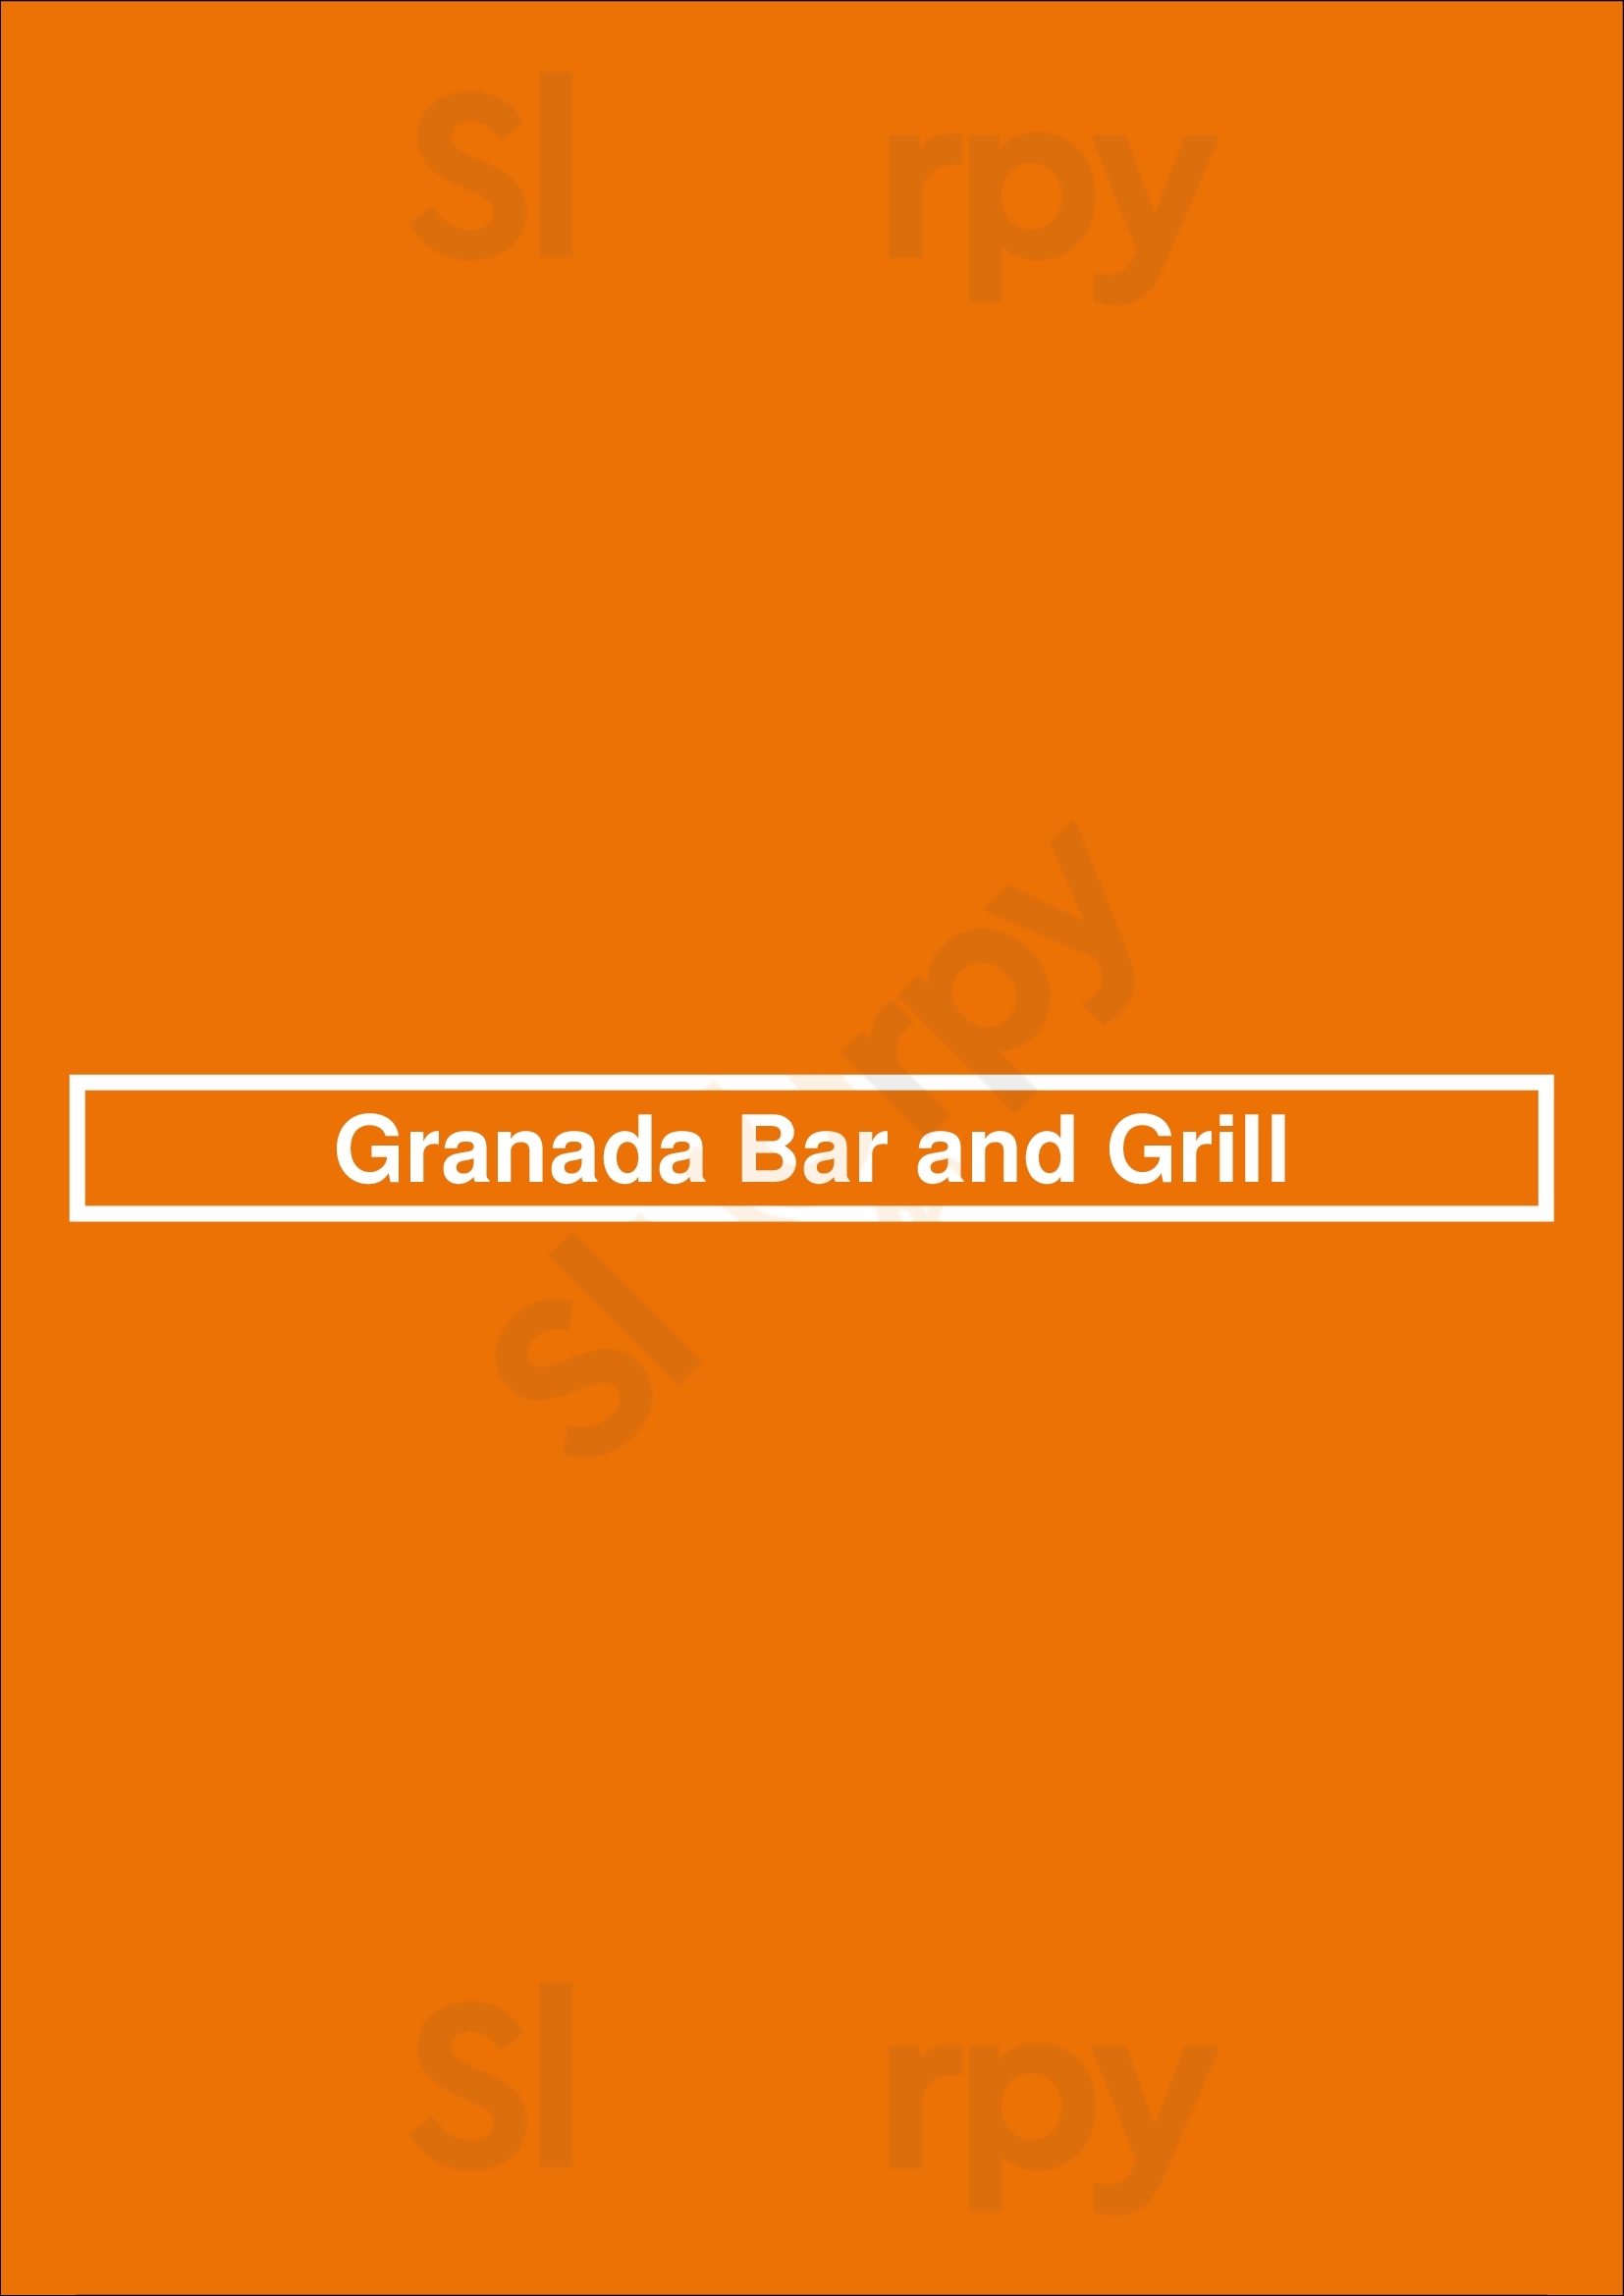 Granada Bar And Grill Scottsdale Menu - 1